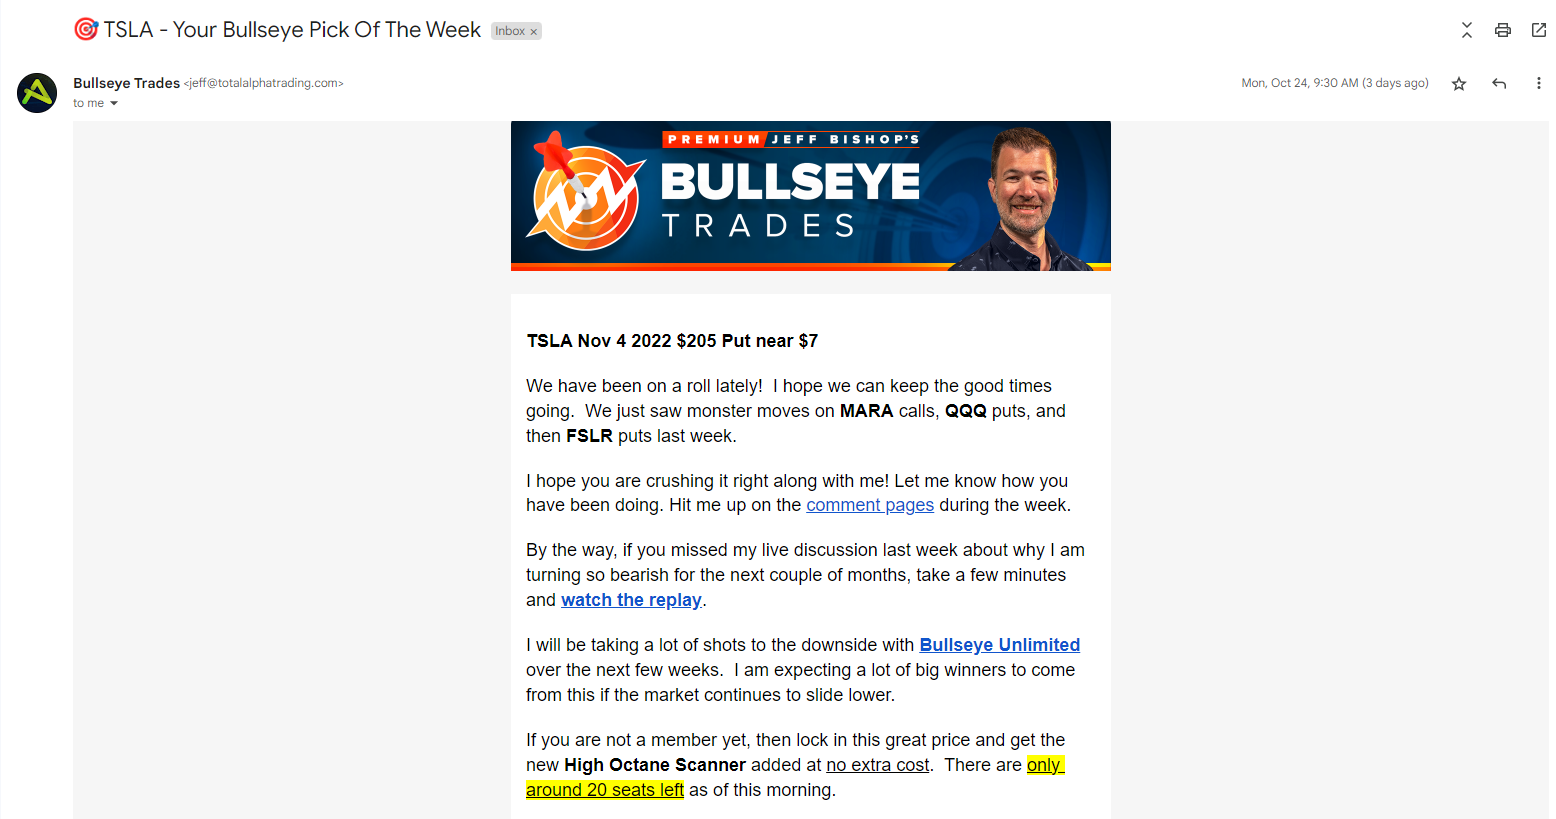 Bullseye trades email